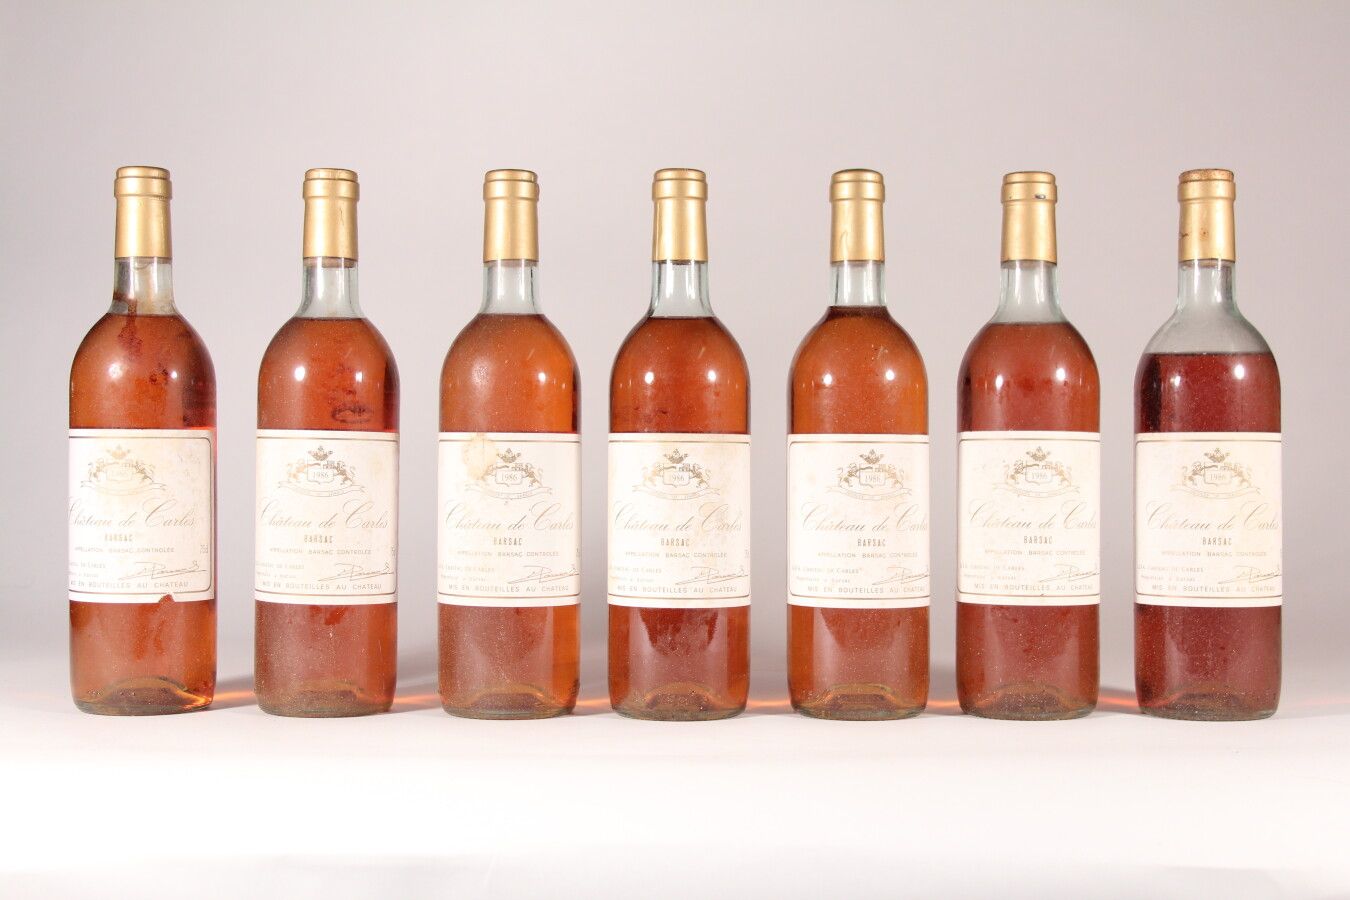 Null 1986 - Château Carles Barsac

Sauternes White - 7 bottles